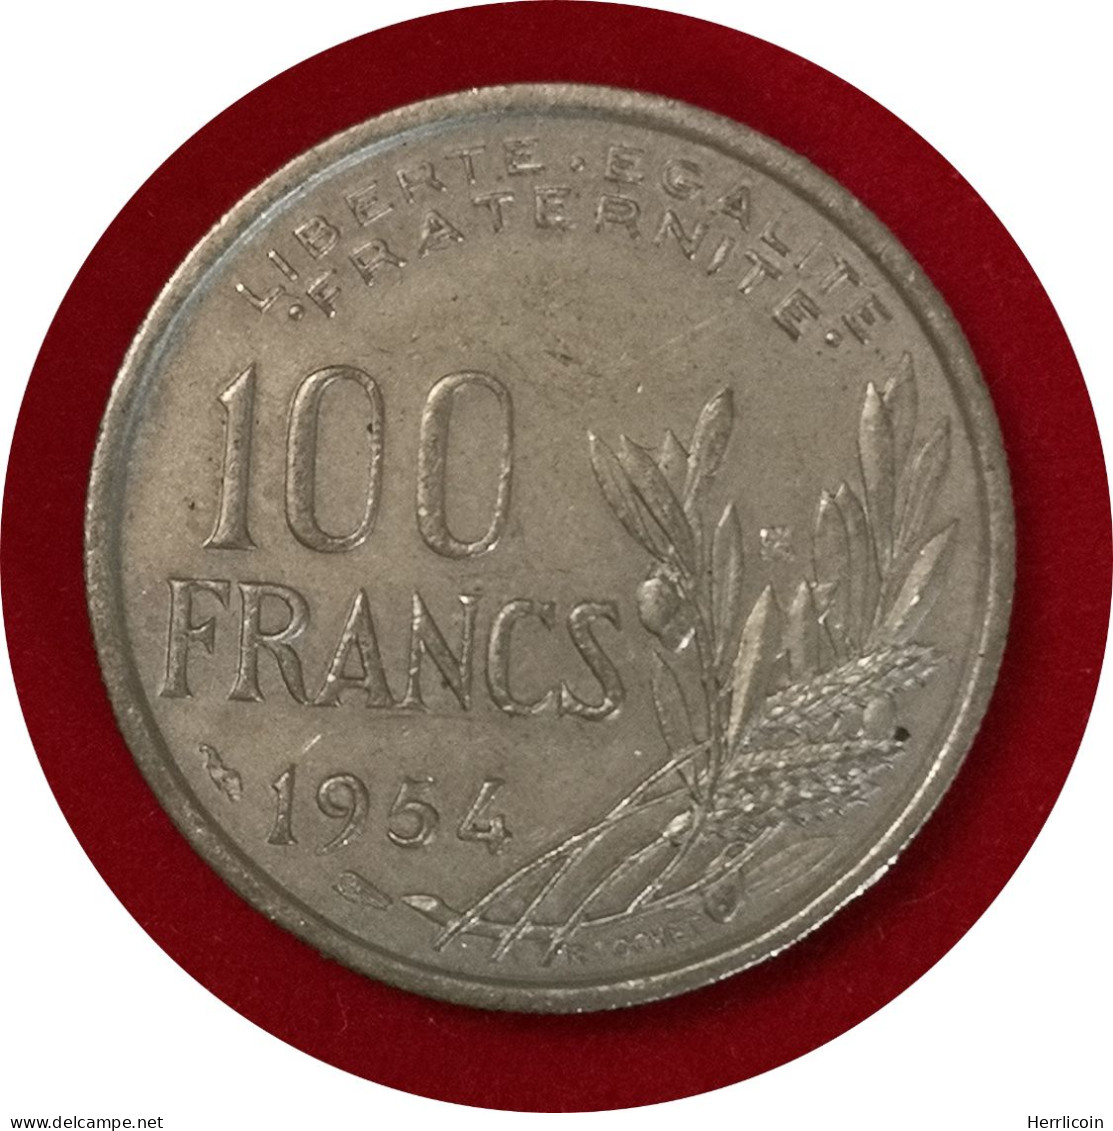 Monnaie France - 1954 - 100 Francs Cochet - 100 Francs